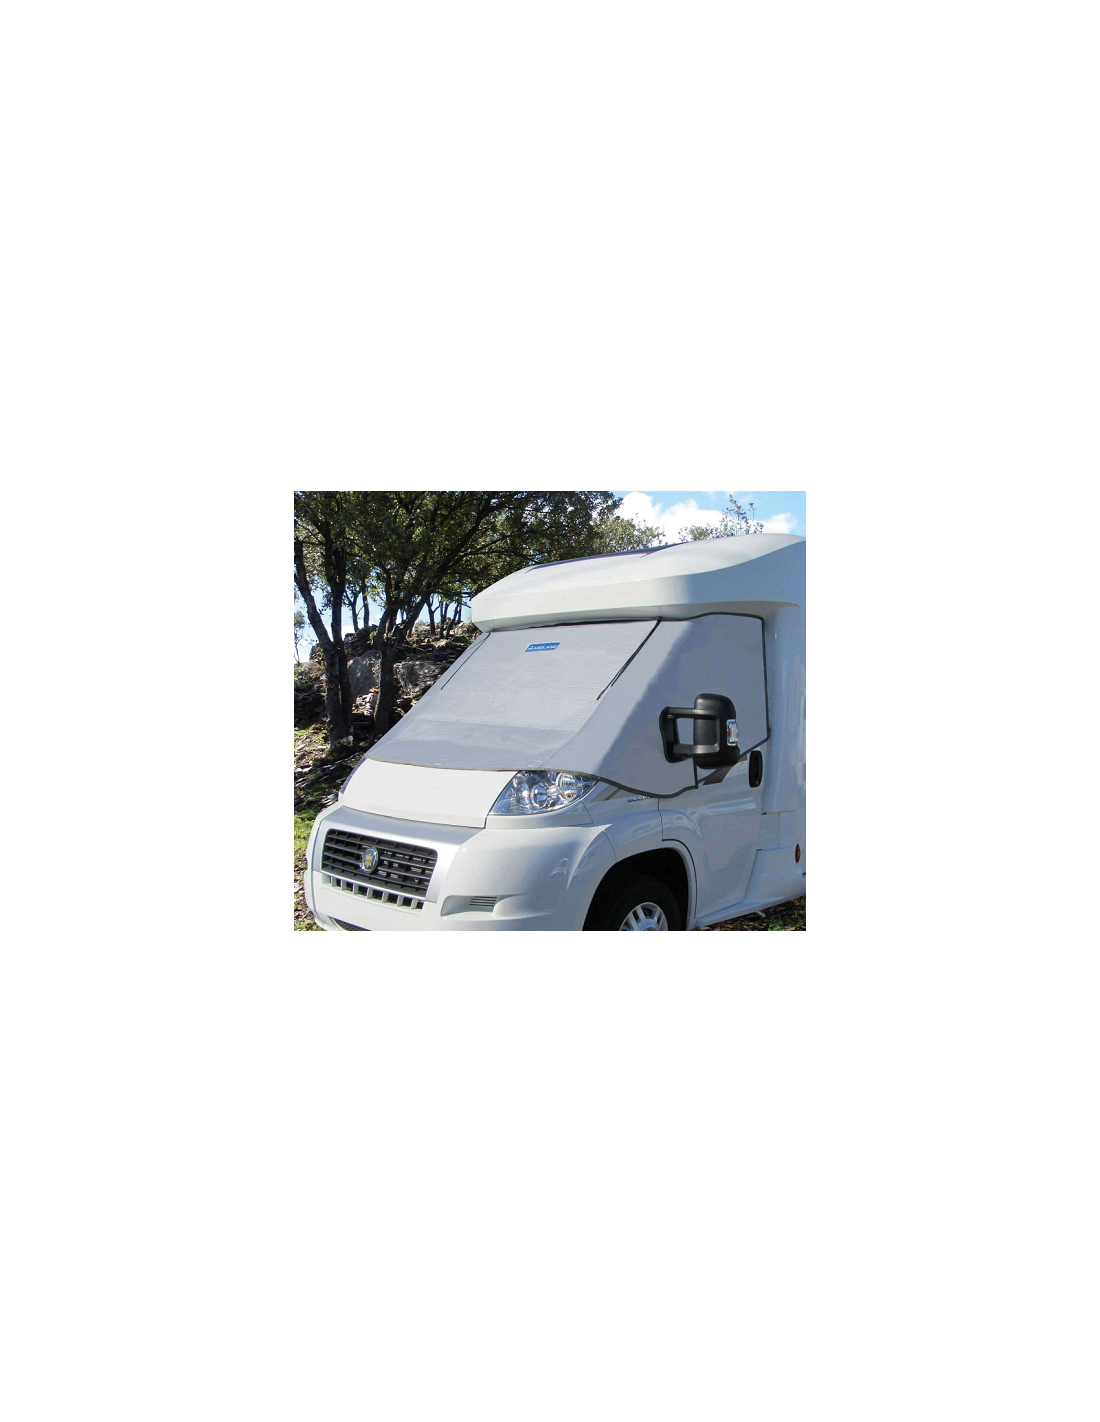 VOLET EXTÉRIEUR ISOTHERME RABATTABLE BOXER / JUMPER / DUCATO X250/X290 -  2006 > 70CPANOX250 : Accessoires camping-car : caravane - Camp' Loisirs  Diffusion